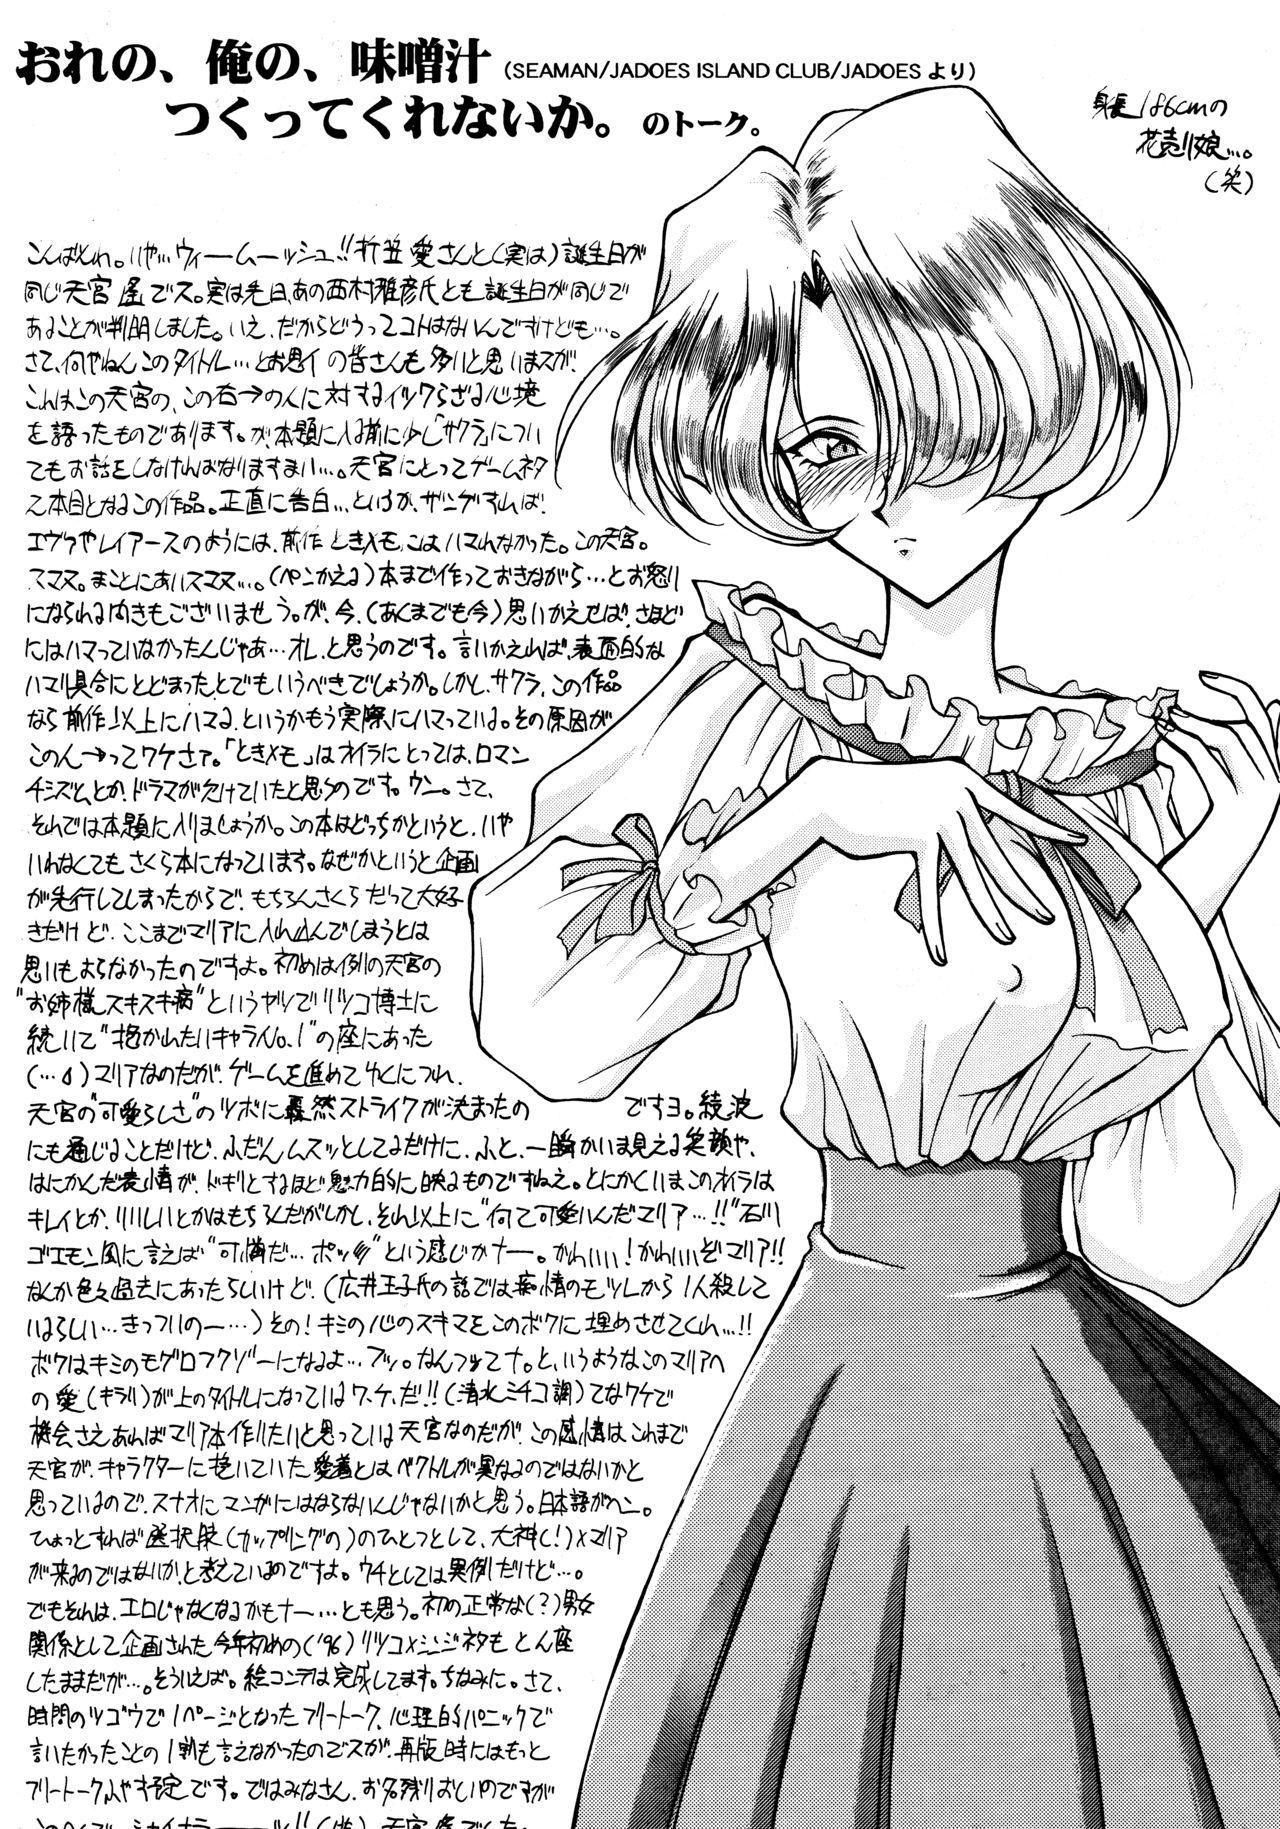 Banho Physical Love #2 - Sakura taisen Cei - Page 3